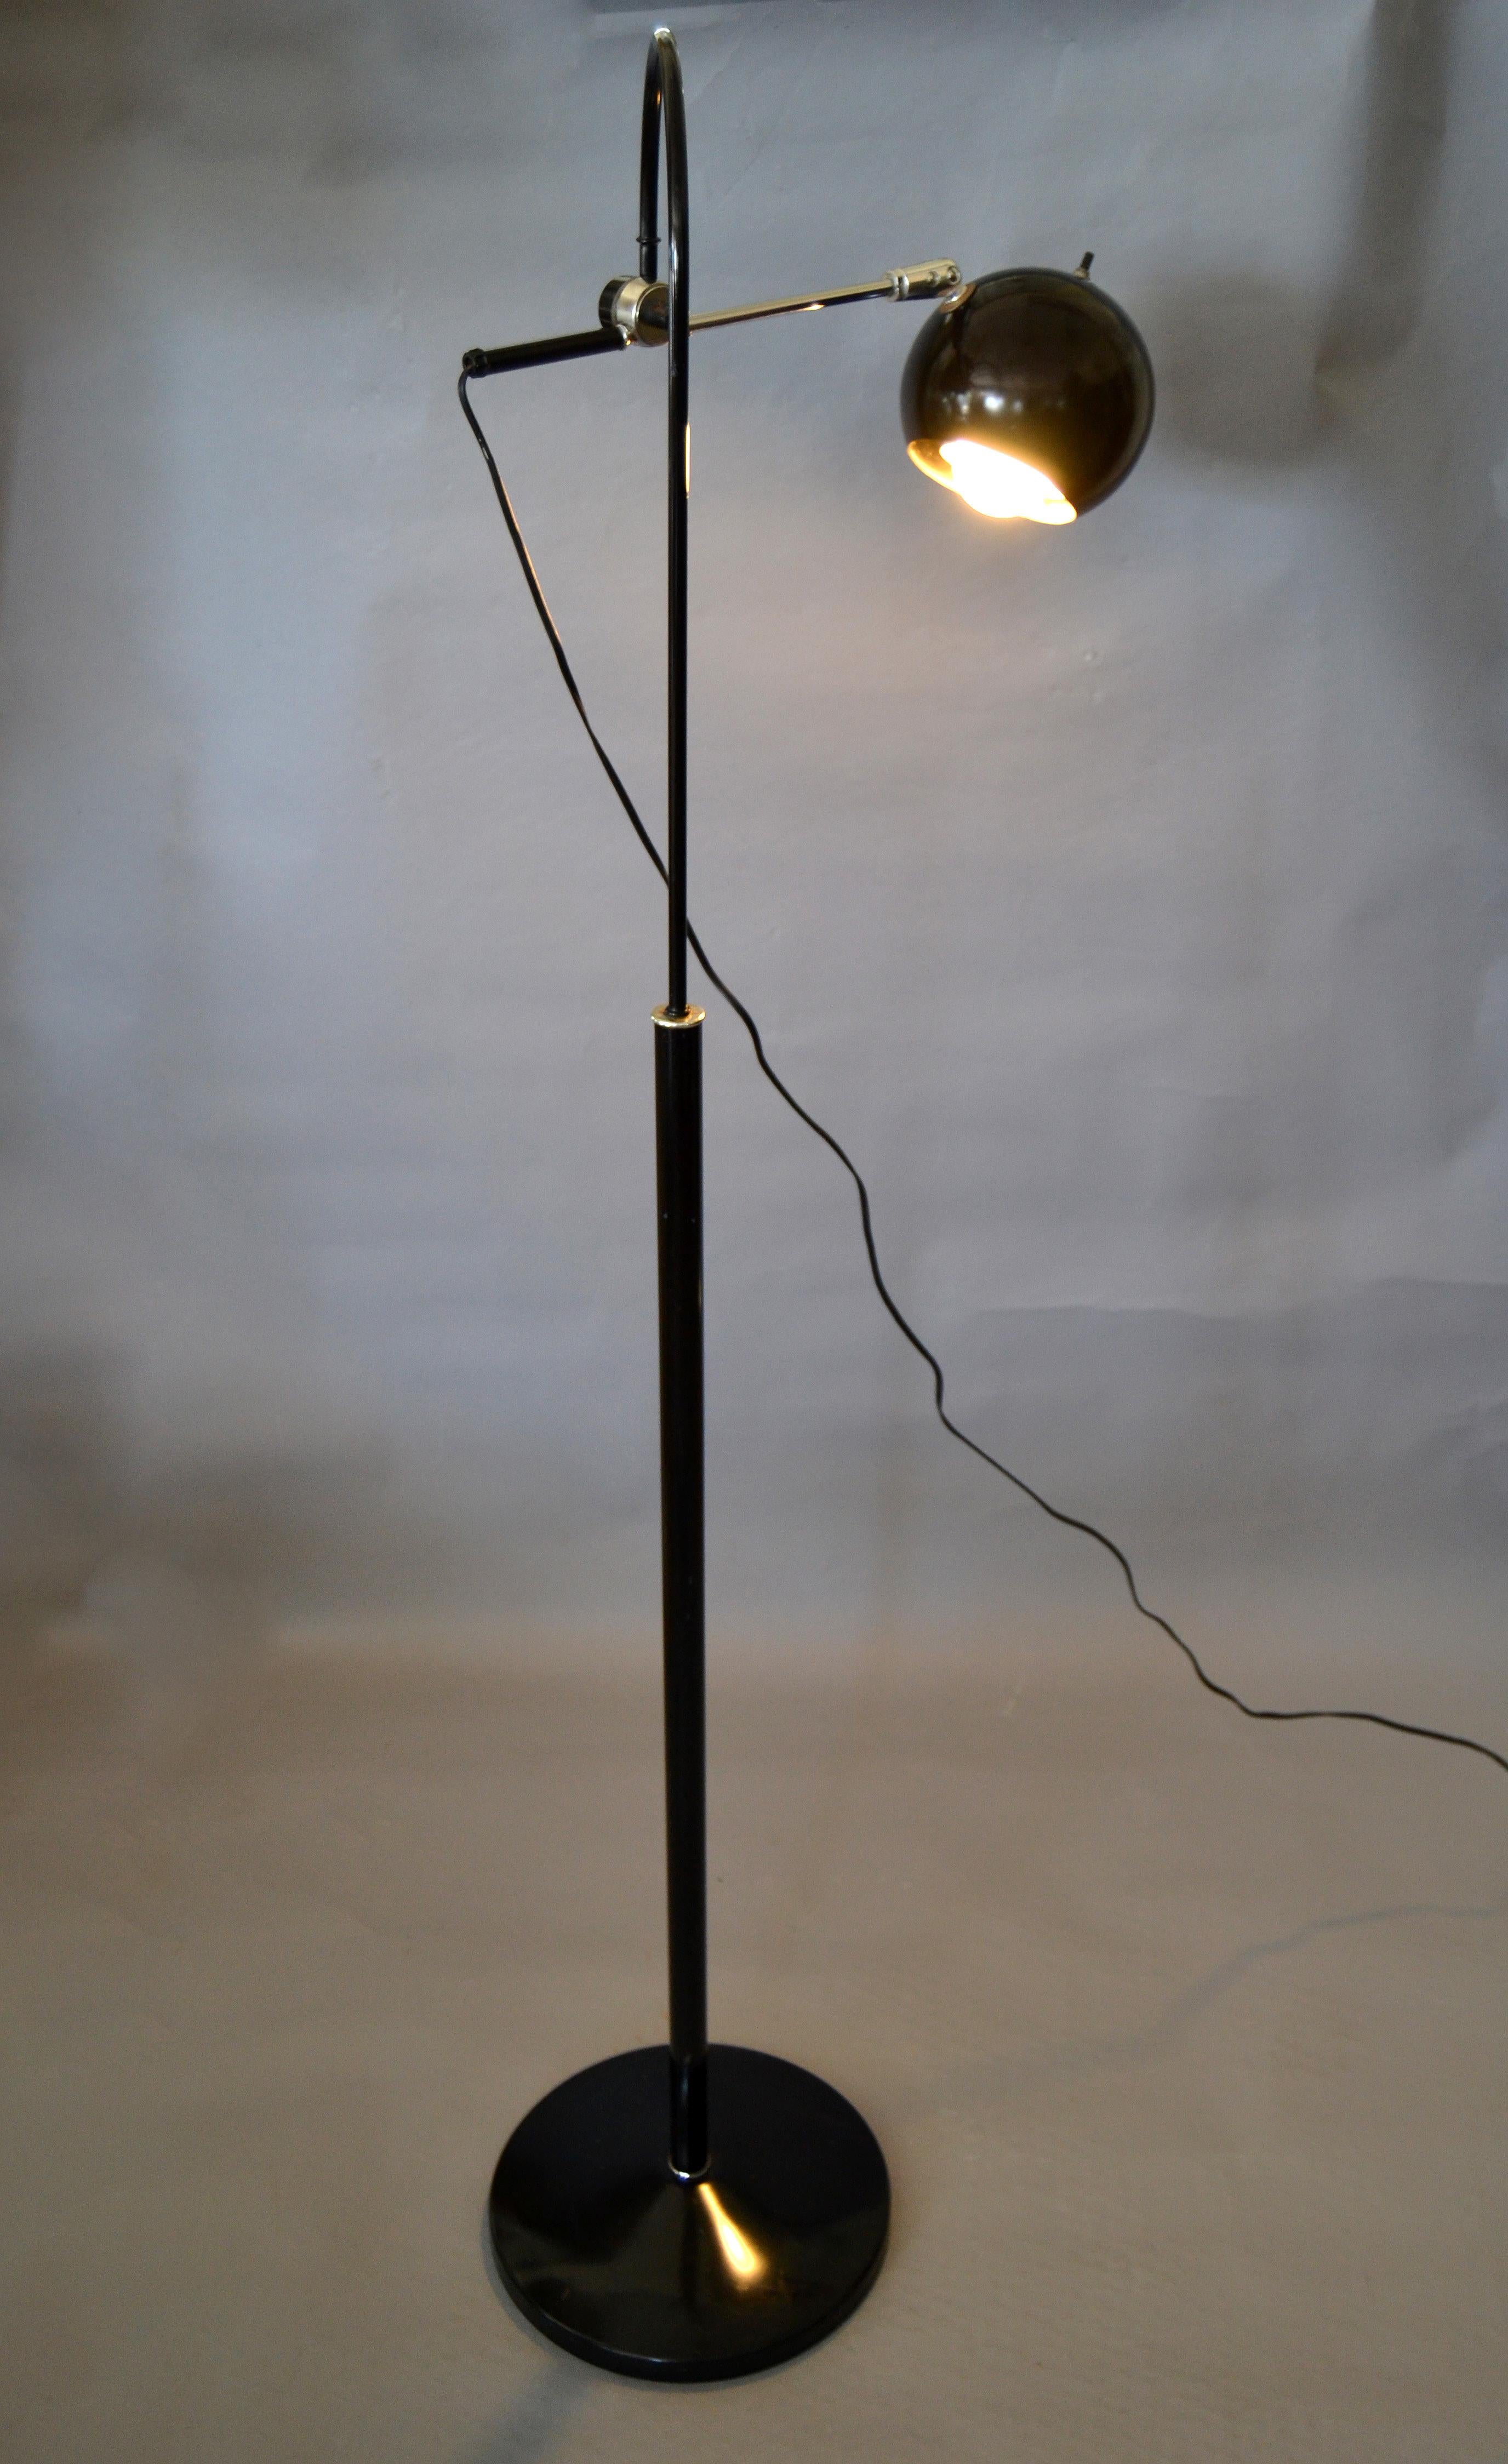 Mid-20th Century Mid-Century Modern Black Metal Floor Lamp with Adjustable Arm & Round Ball Shade